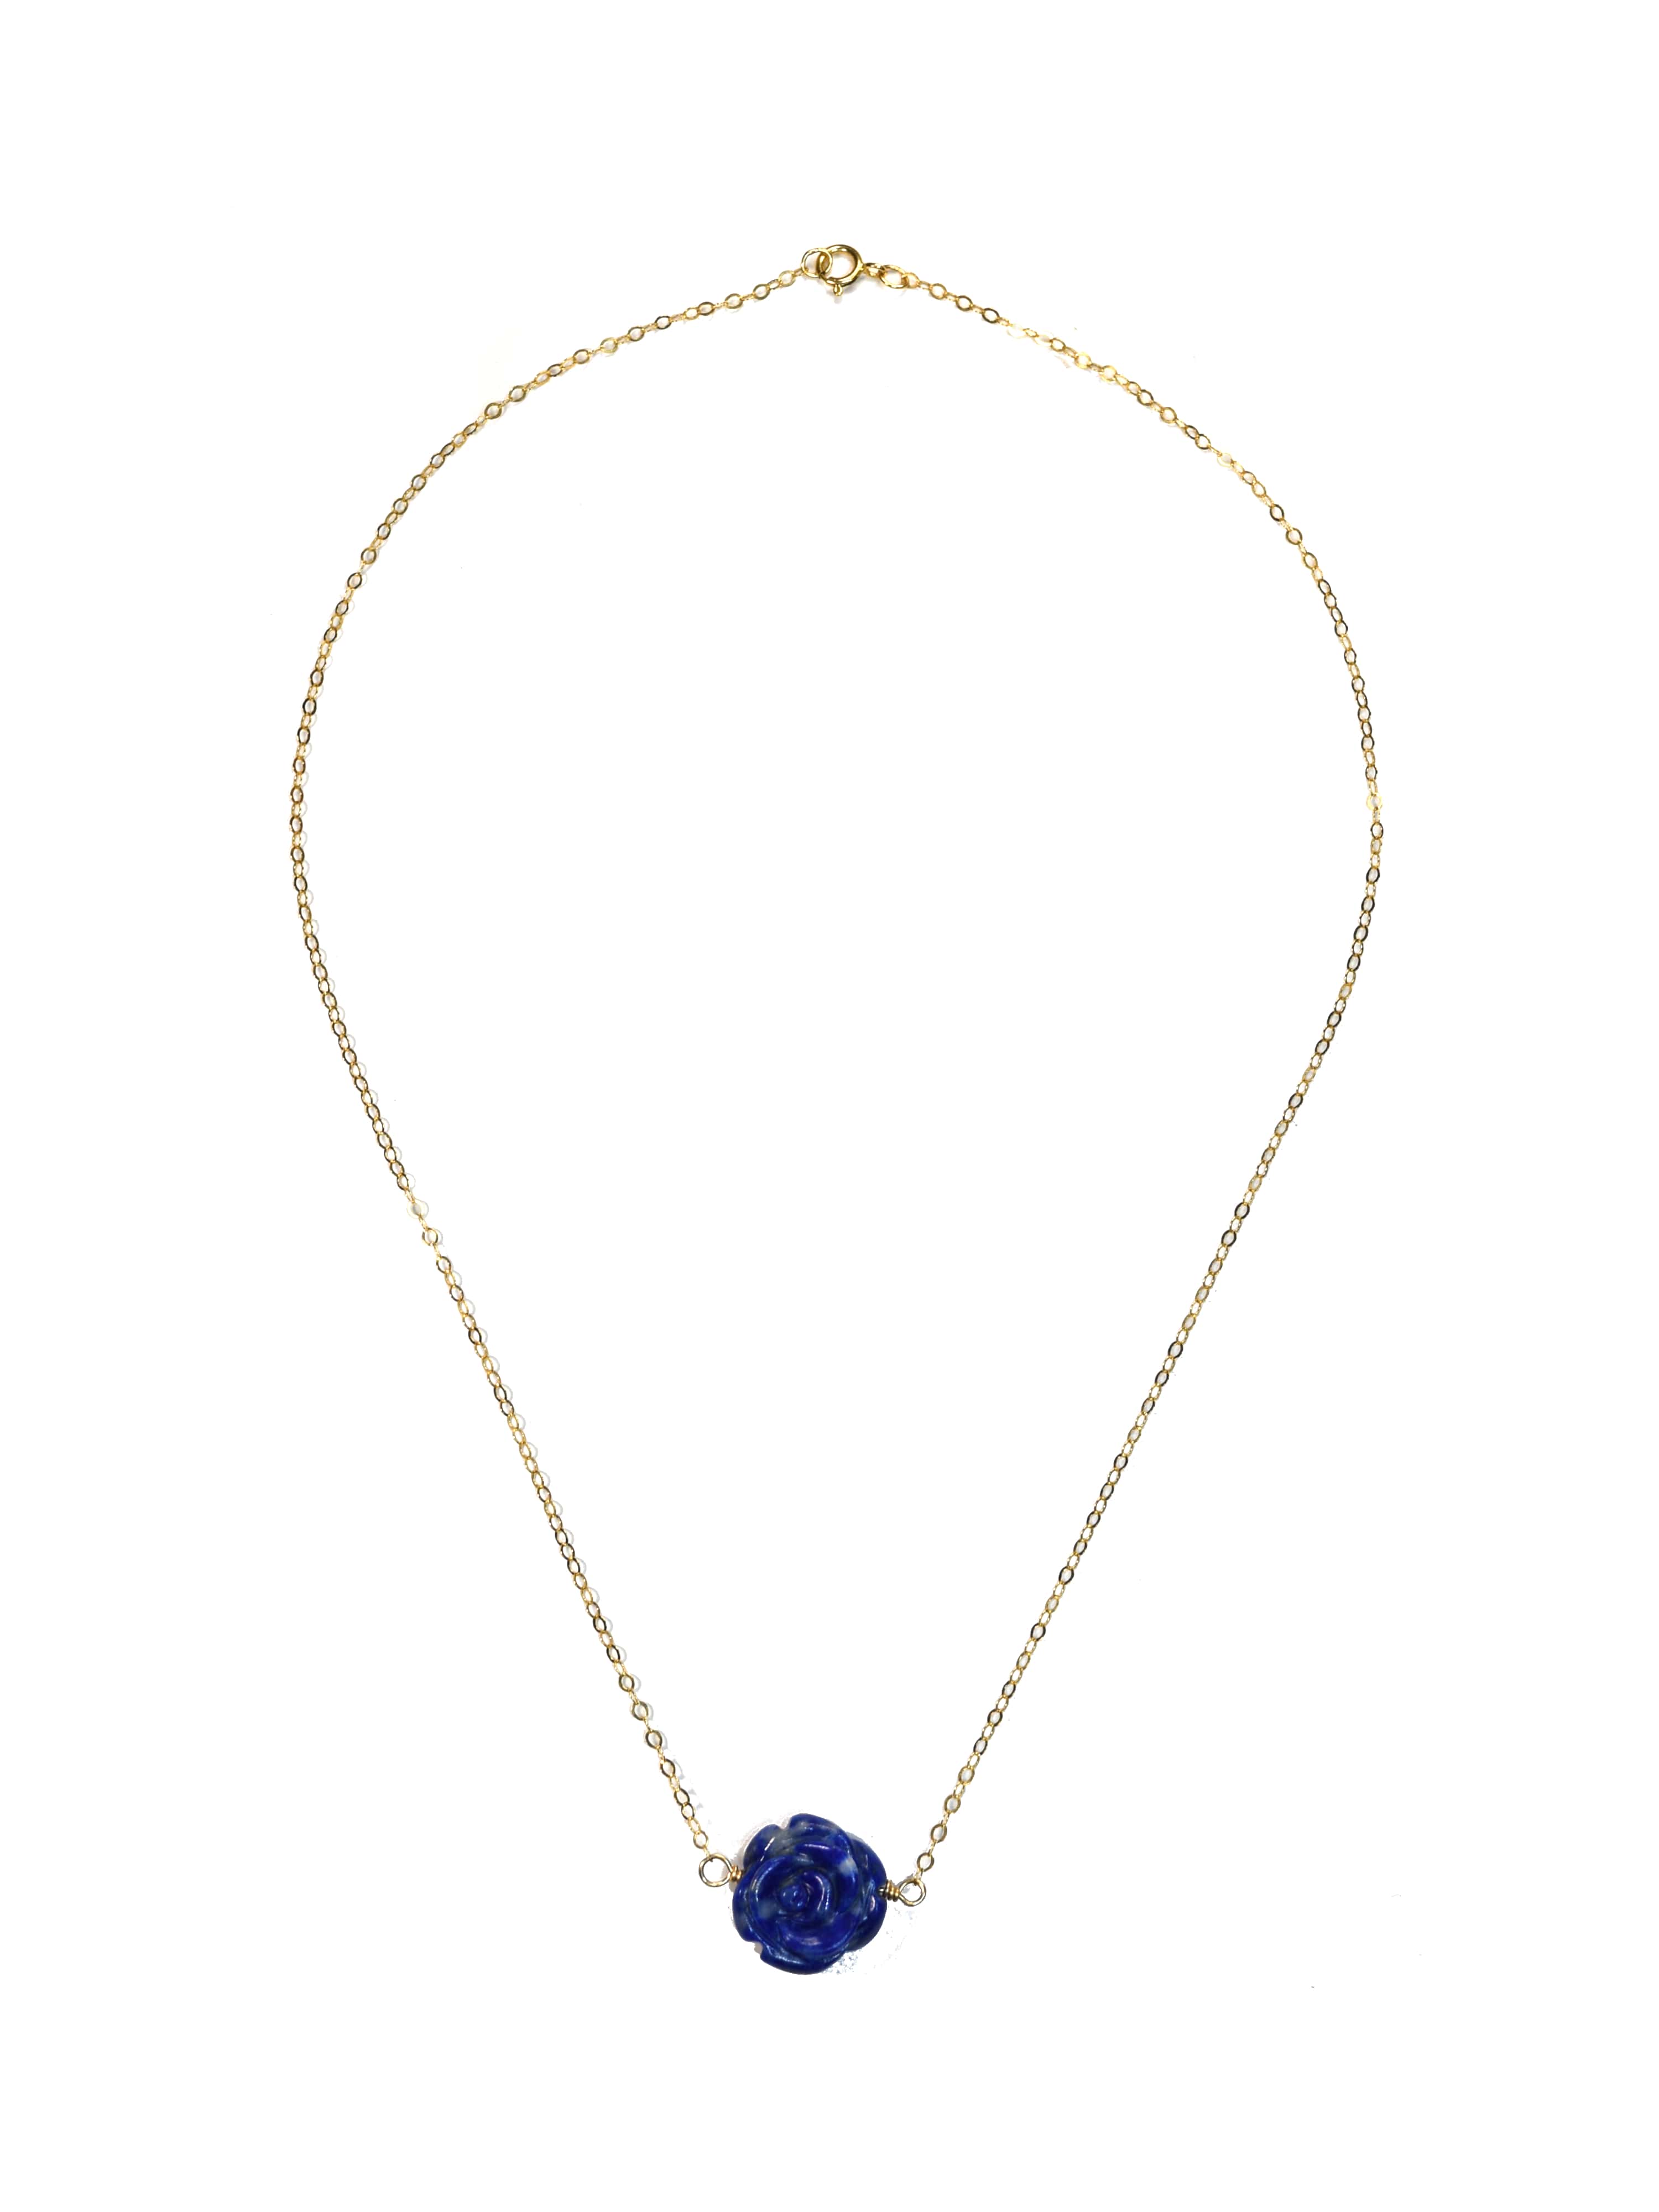 Lapis Lazuli Carved Rose Necklace